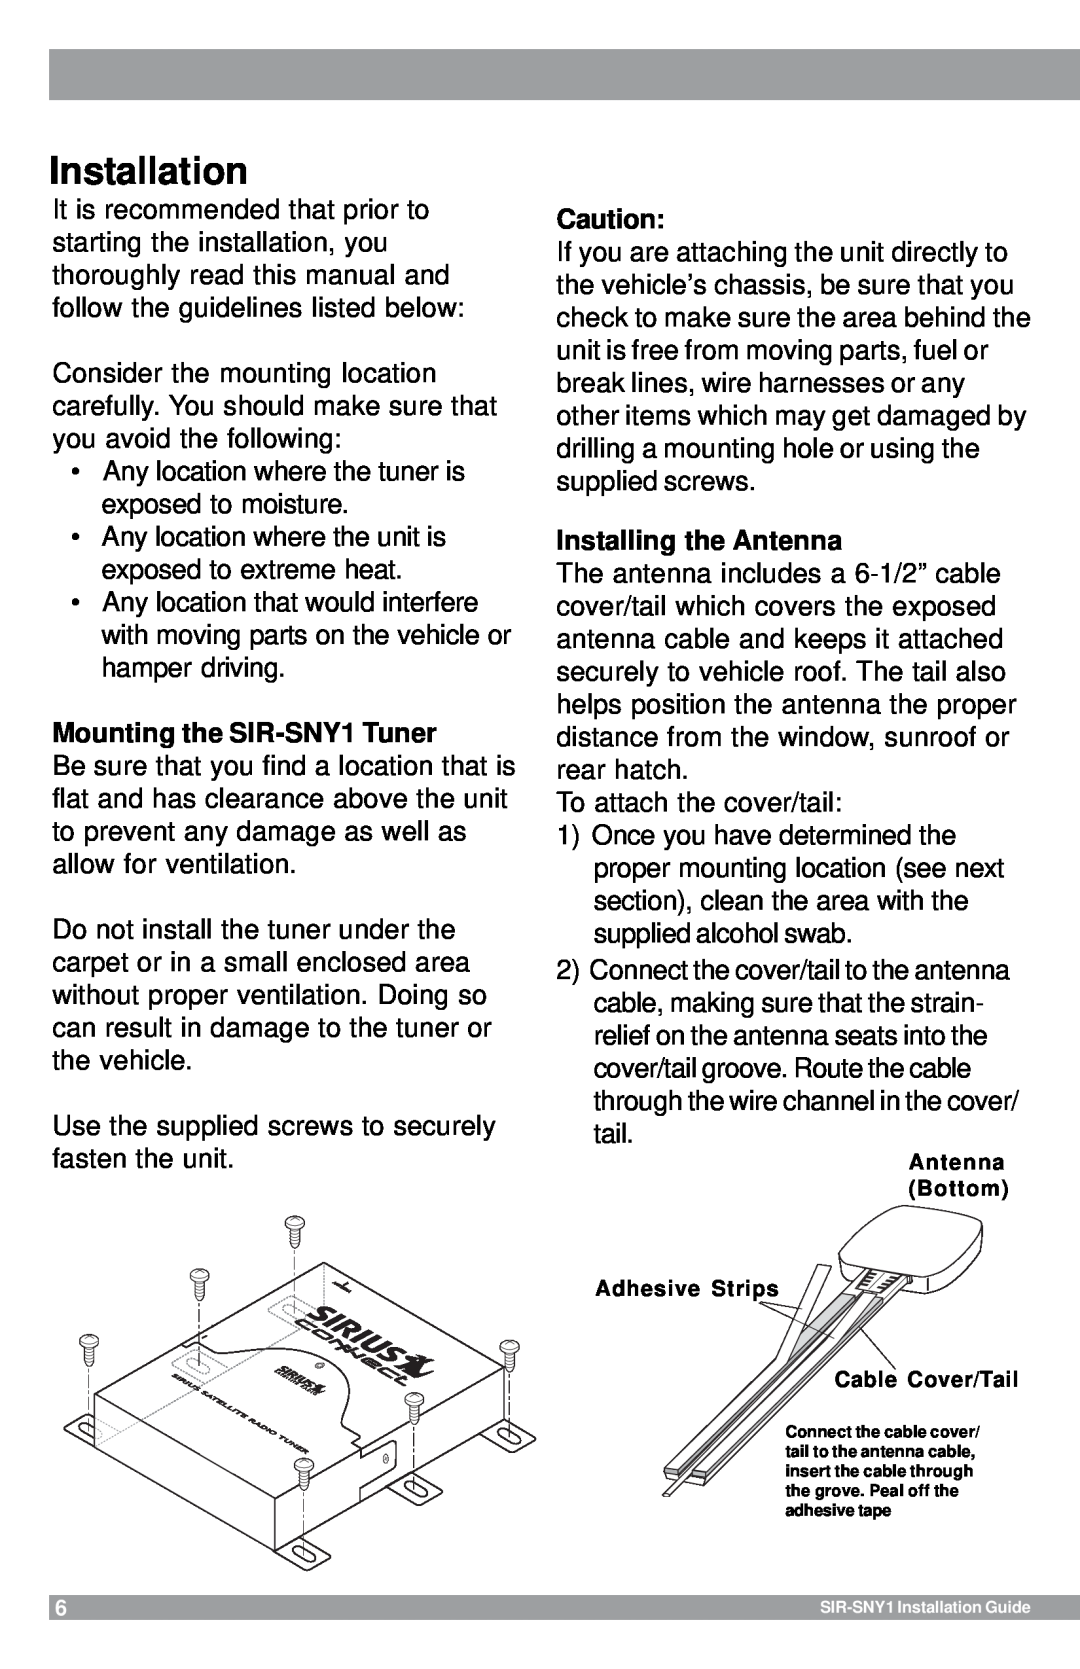 Sirius Satellite Radio manual Installation, Mounting the SIR-SNY1Tuner, Installing the Antenna 